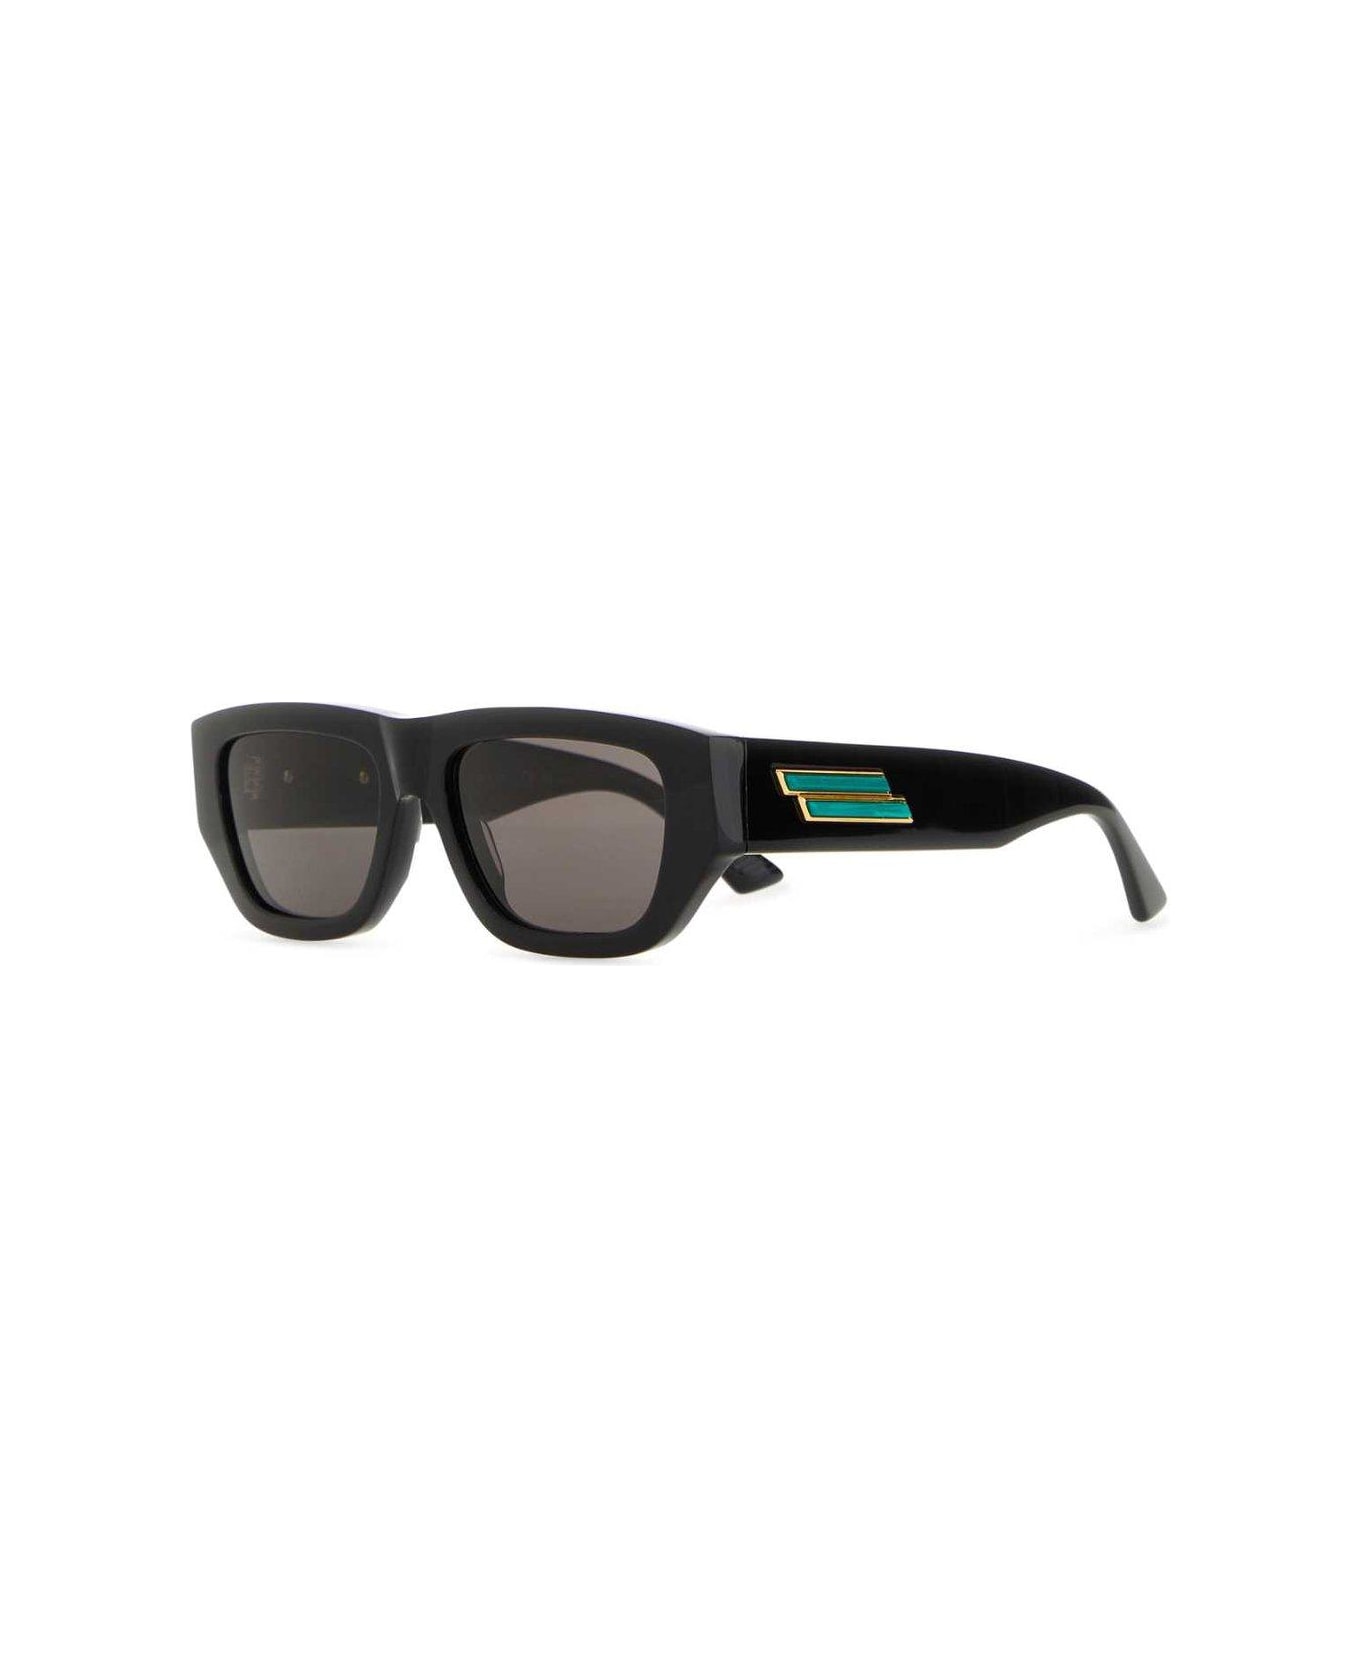 Bottega Veneta Black Acetate Sunglasses - Black